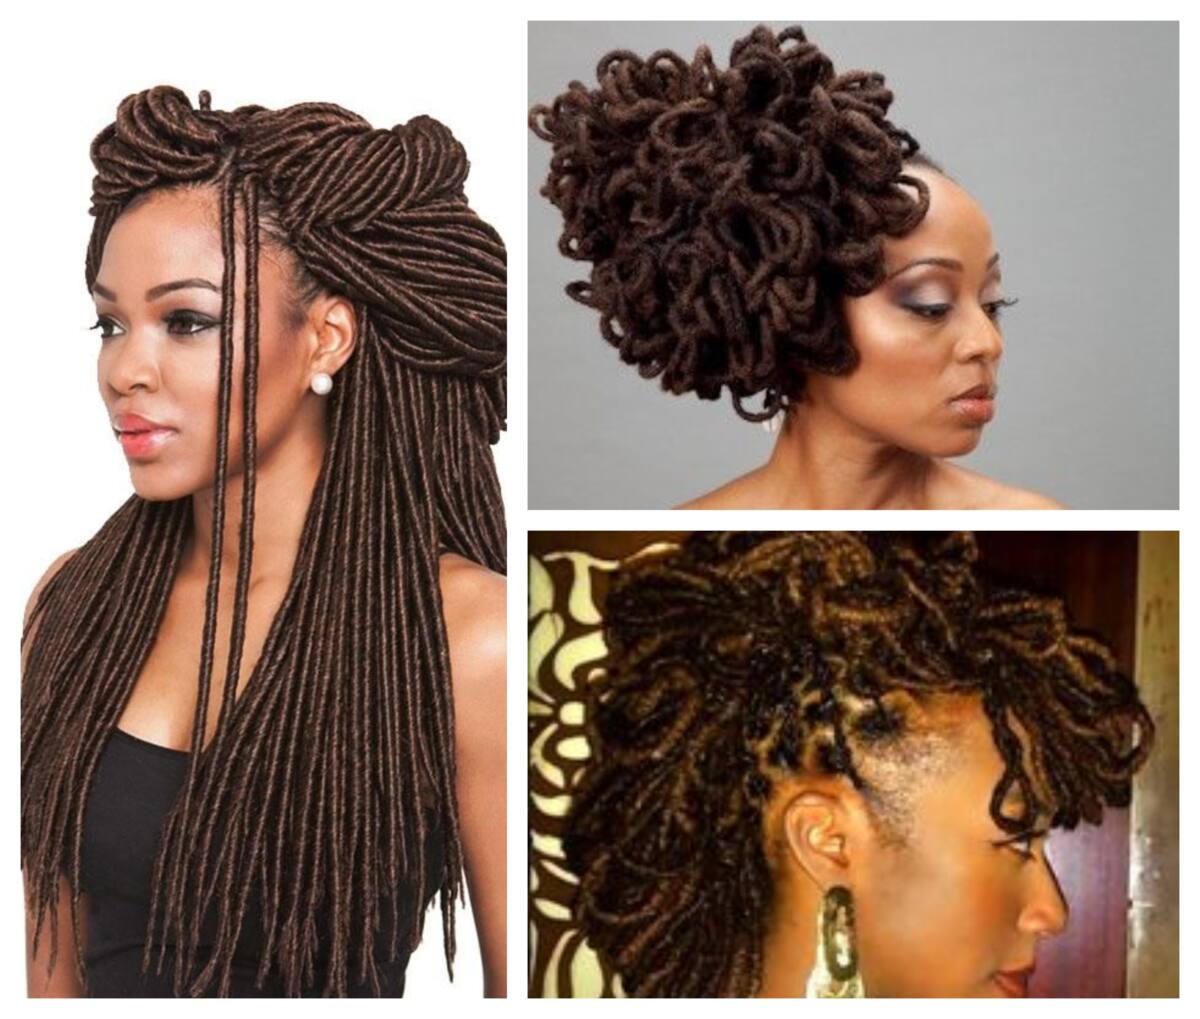 Dreadlocks Hairstyles for Black Boys | Kids hairstyles - Afroculture.net